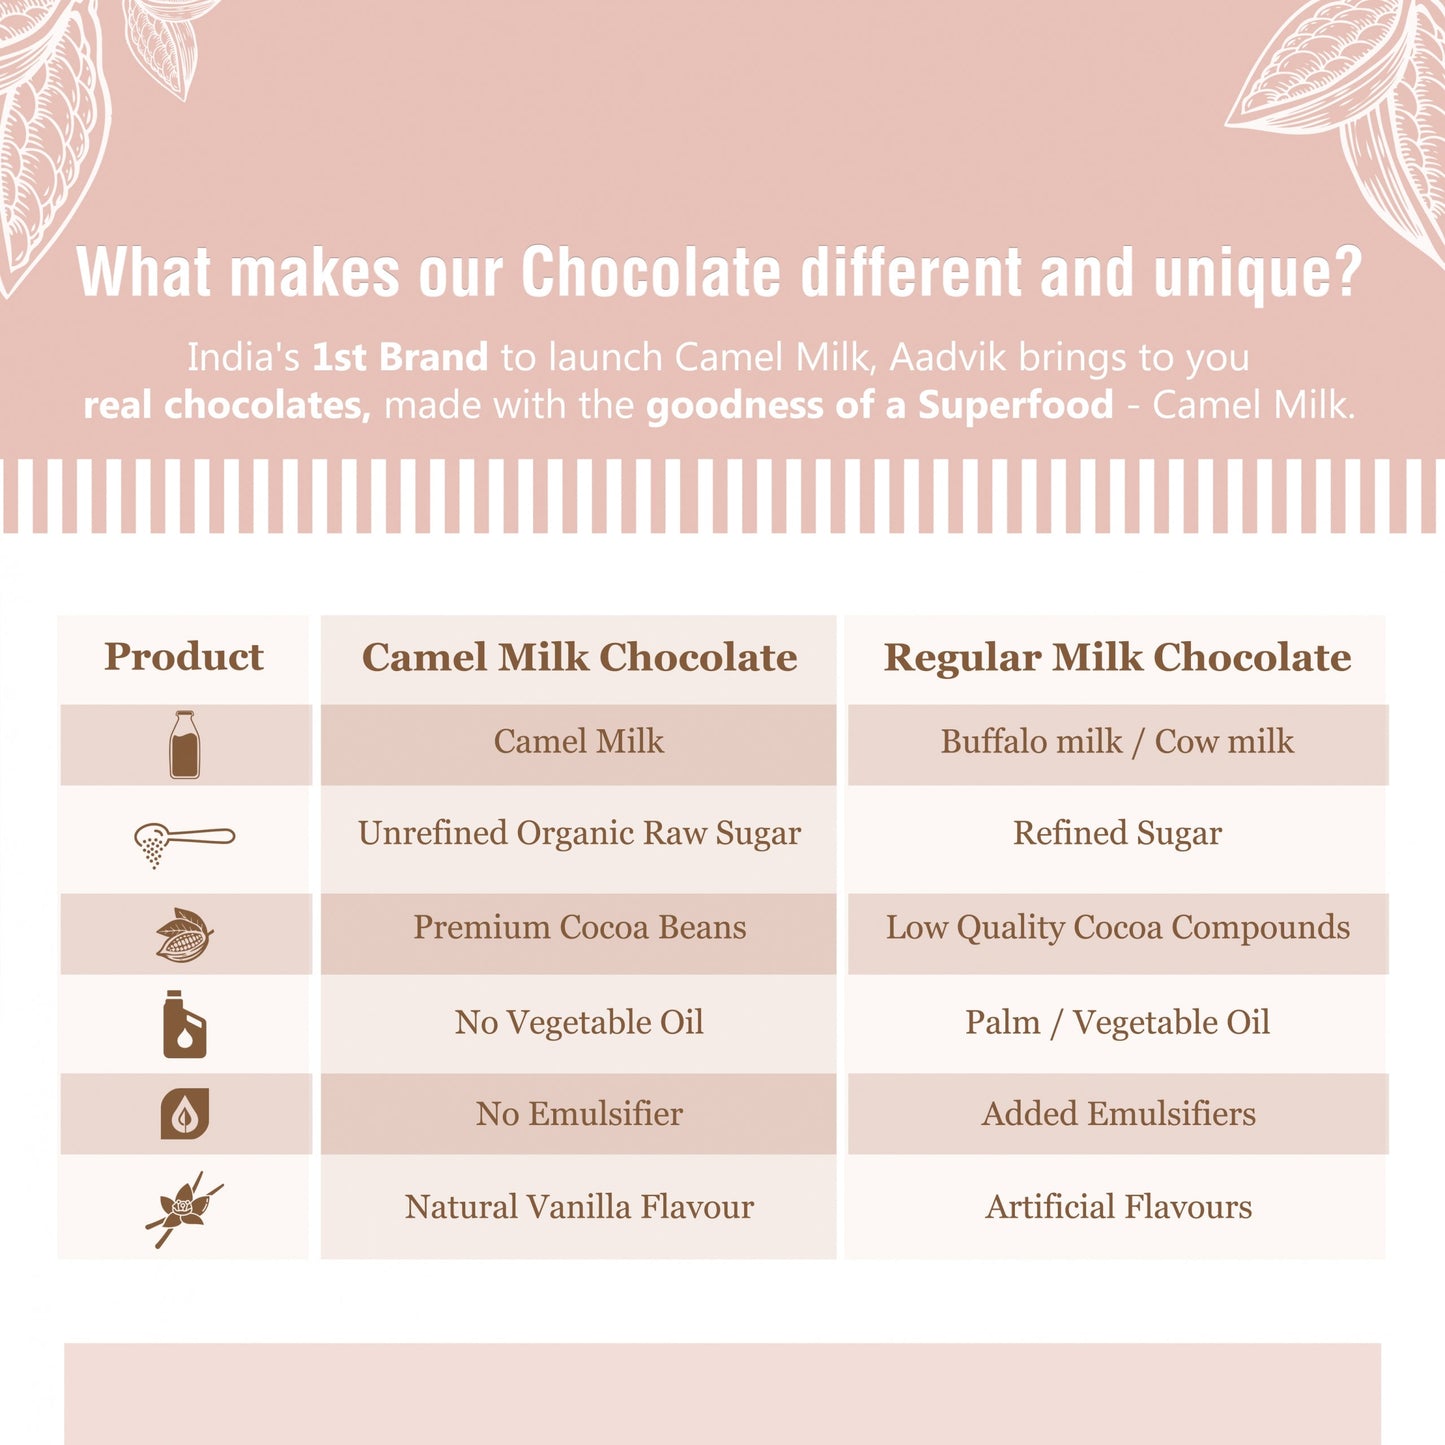 Camel Milk Chocolate | Roasted Almond । 100% Natural Ingredients । Premium Quality